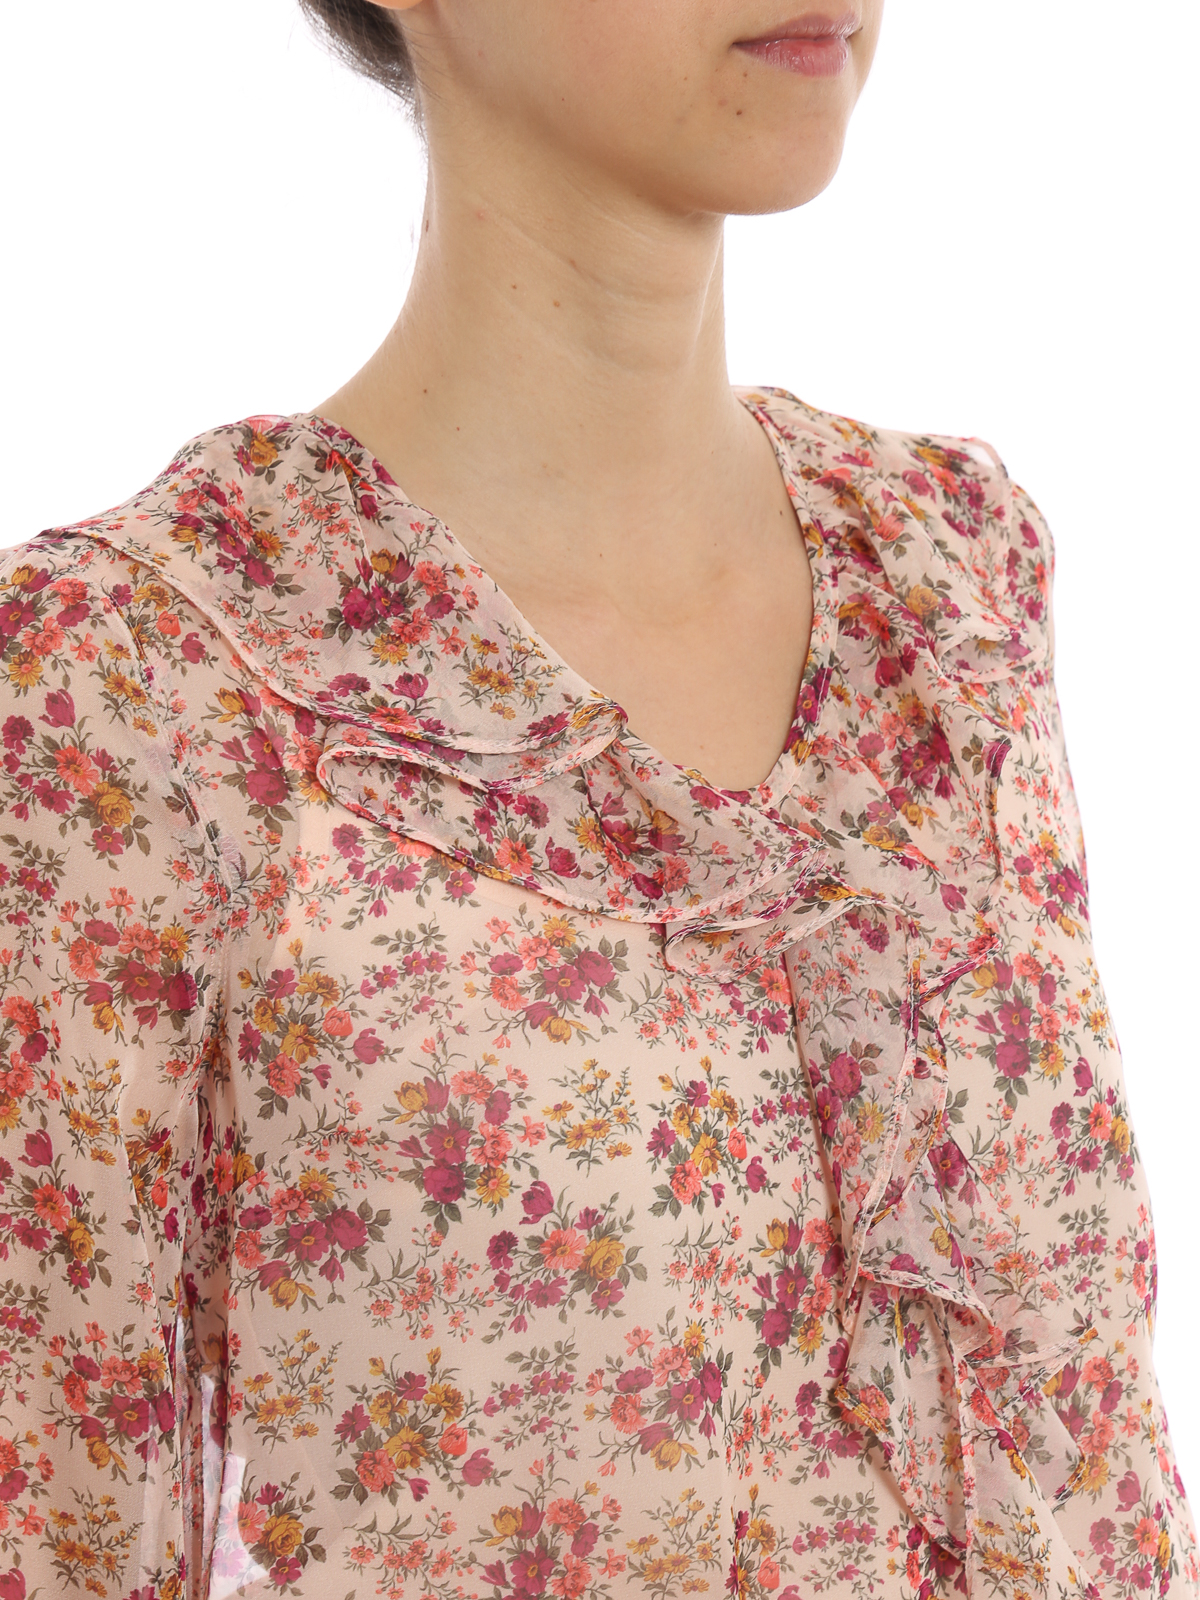 Presentator Welsprekend Verfijning Blouses Twinset - Floral print georgette ruched blouse - 191TP25713617